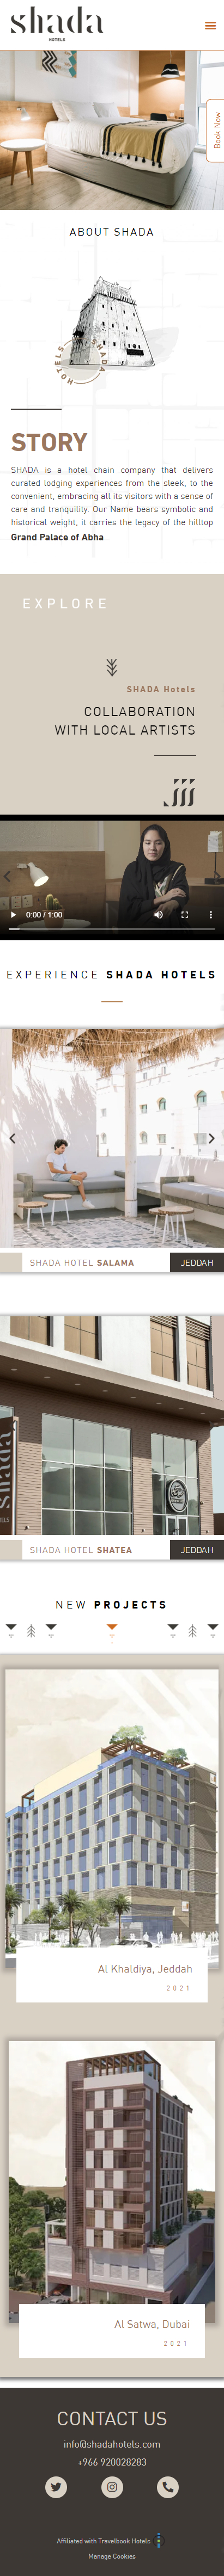 Mobile design for Shada Hotels